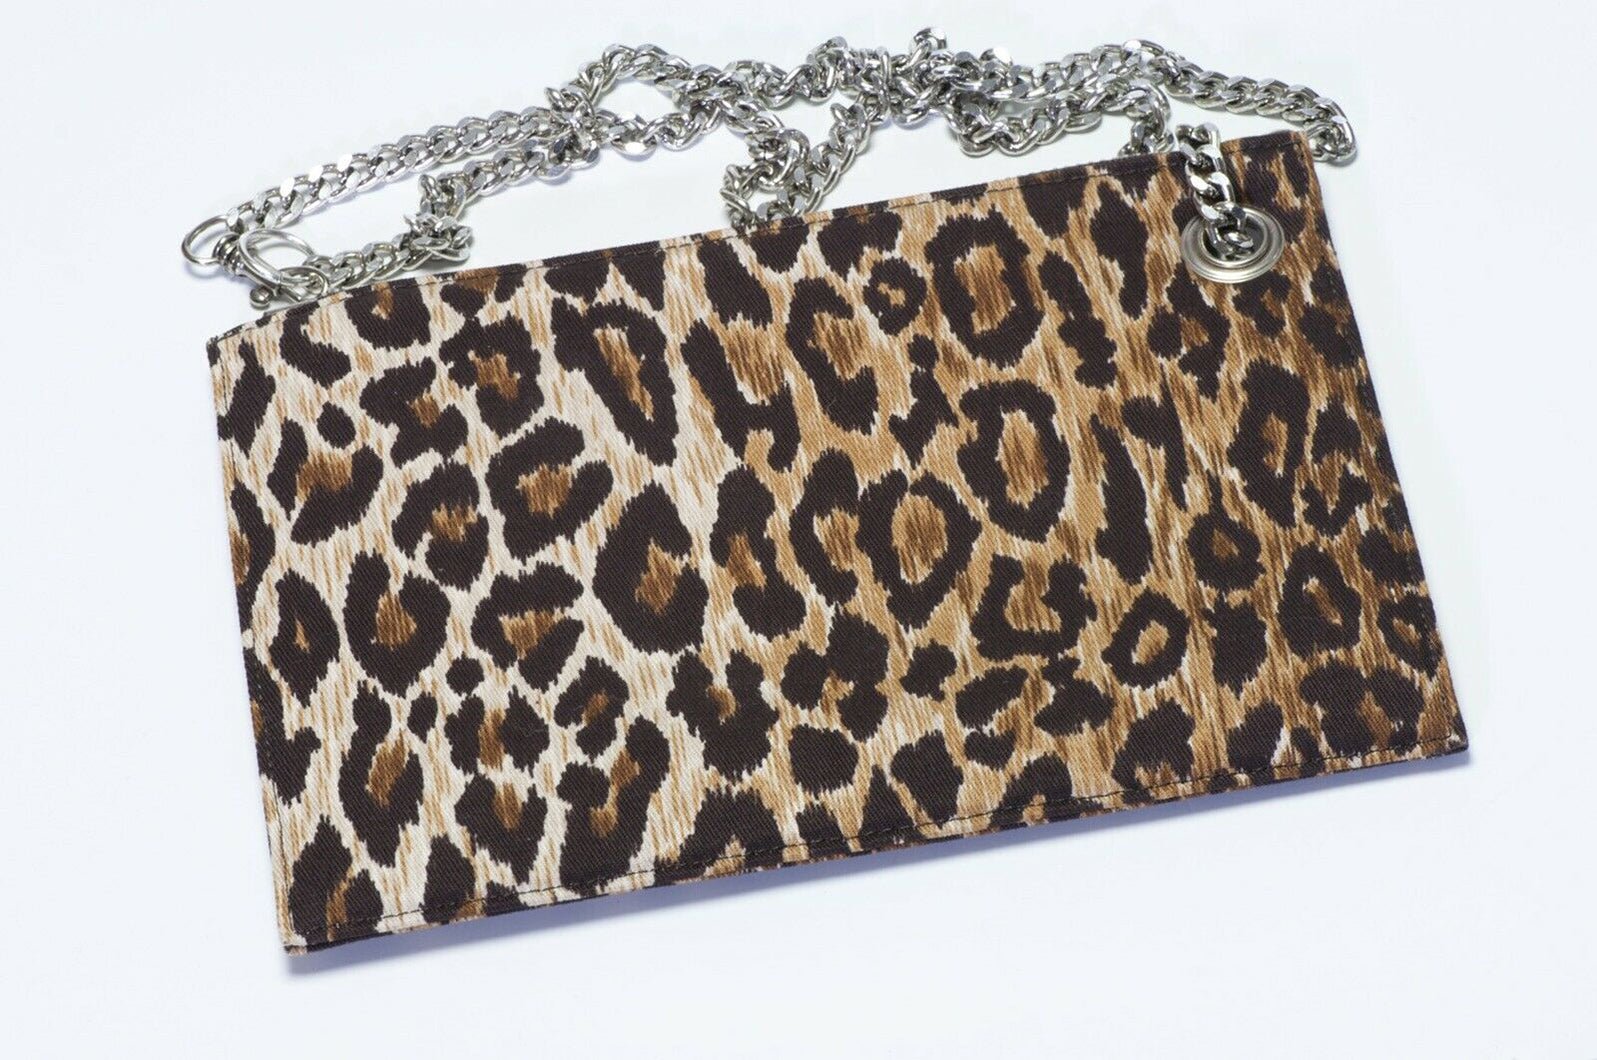 Dolce & Gabbana Leopard Satin Studded Crystal Chain Clutch Bag